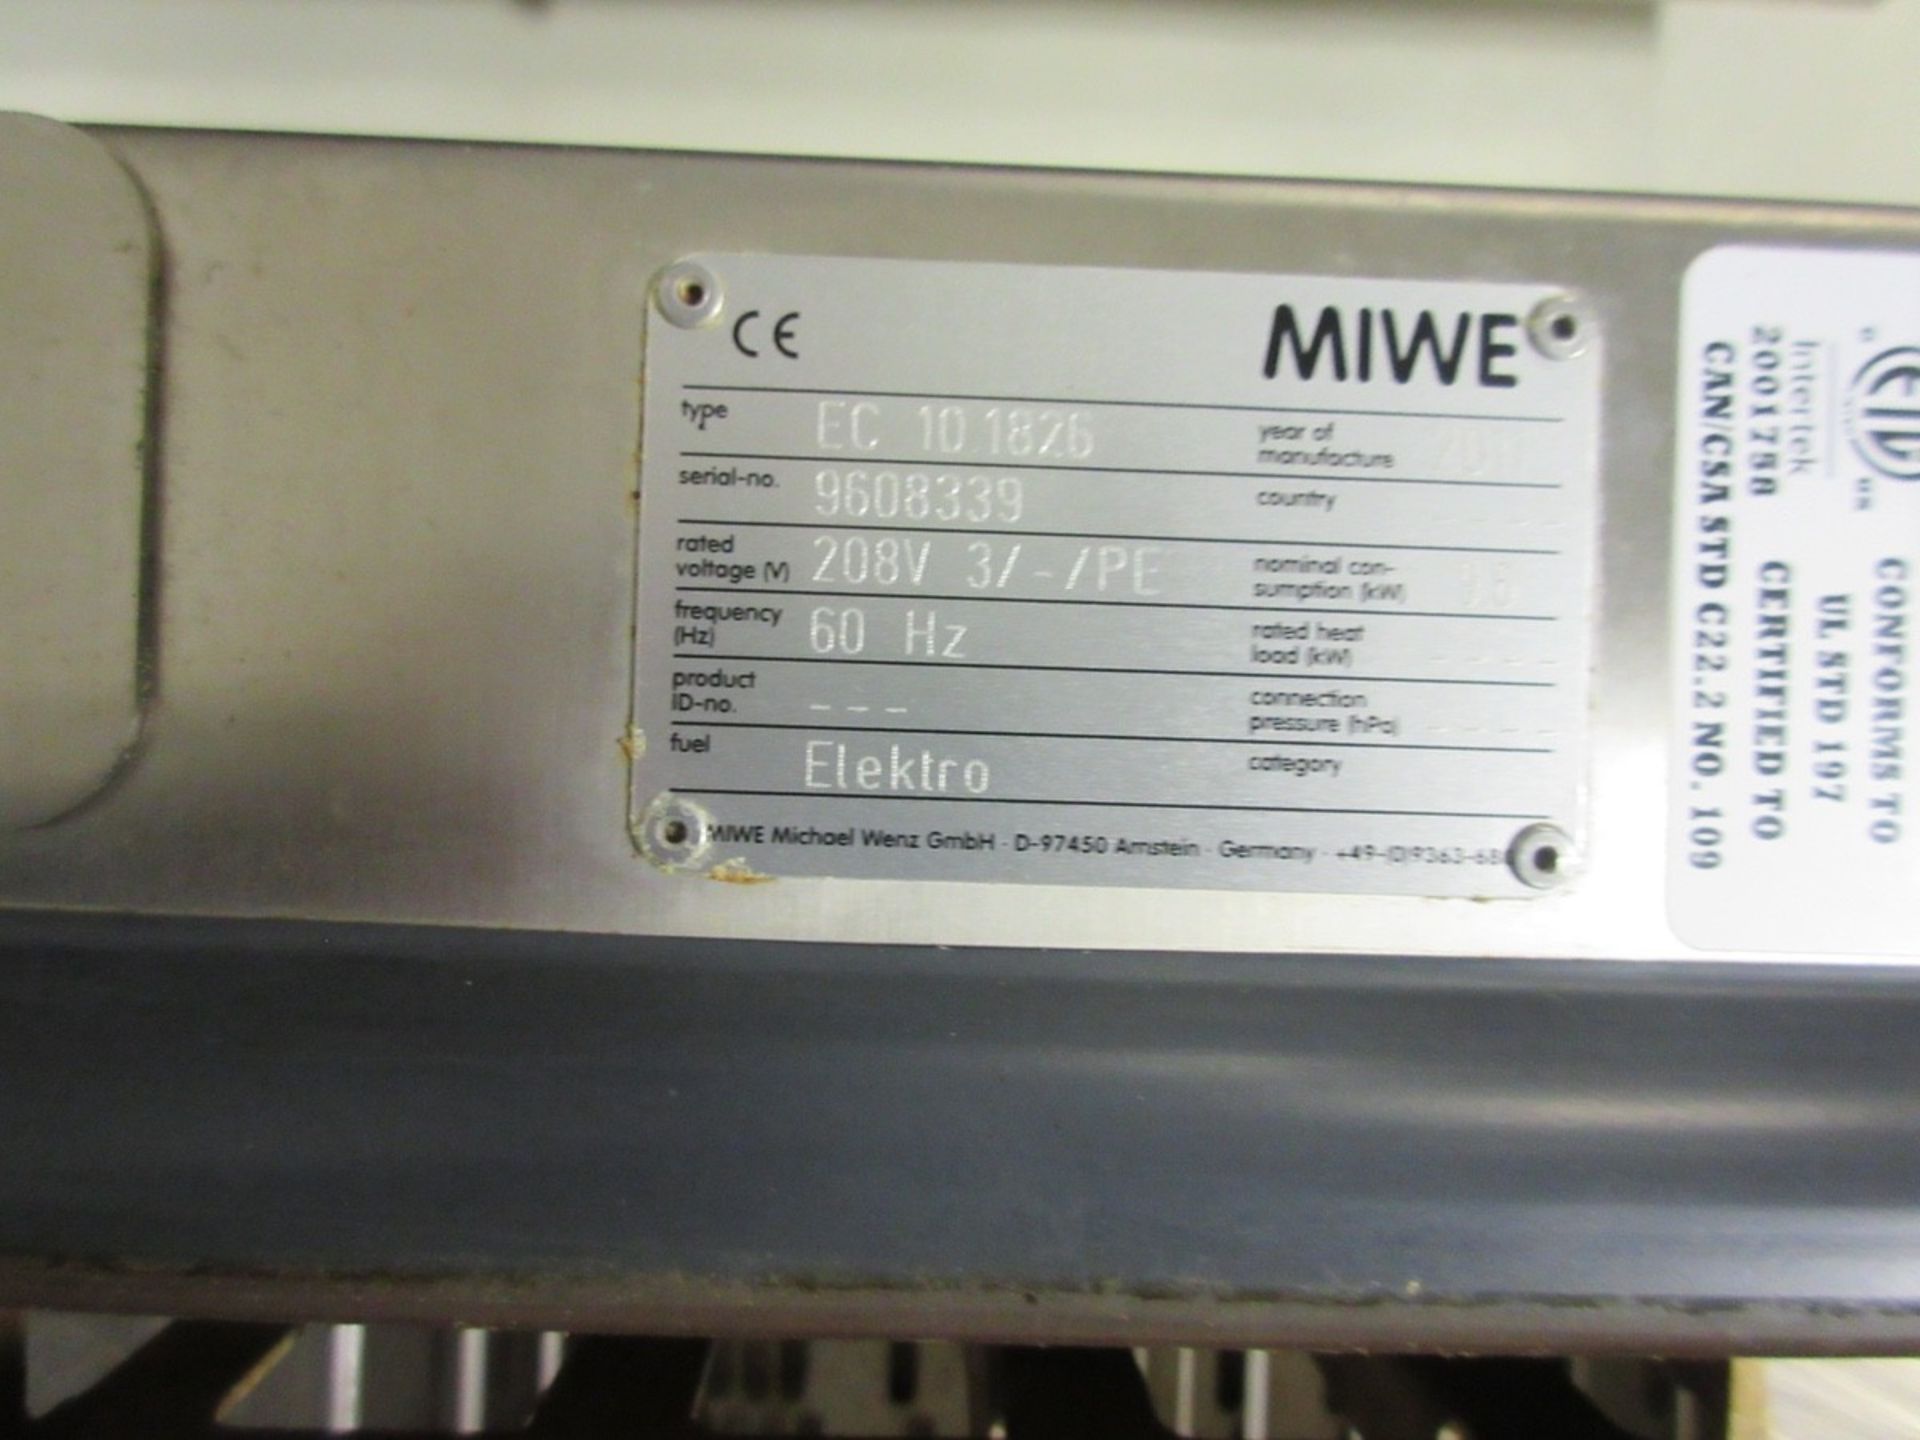 (1) Miwe Econo Double Stack Oven, Type EC10 1826, S/N 9608339, S.S., Port. w/ S.S. Exhaust Hood - Image 5 of 5